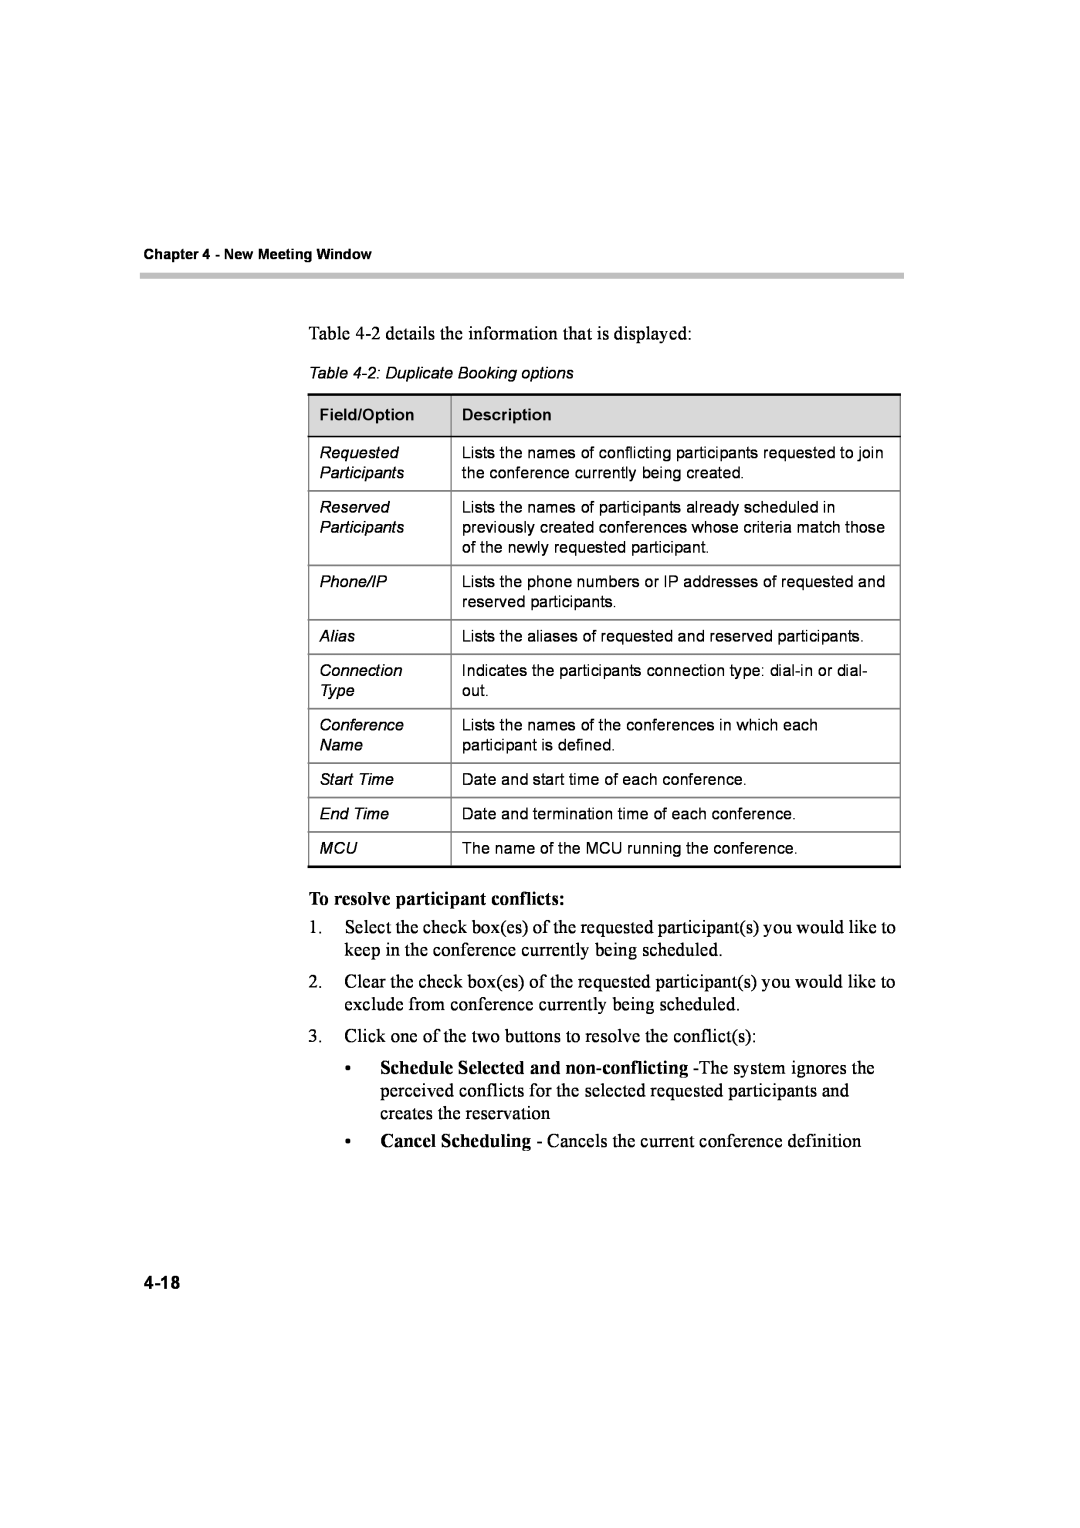 Polycom 8 manual To resolve participant conflicts, Field/Option, Description 